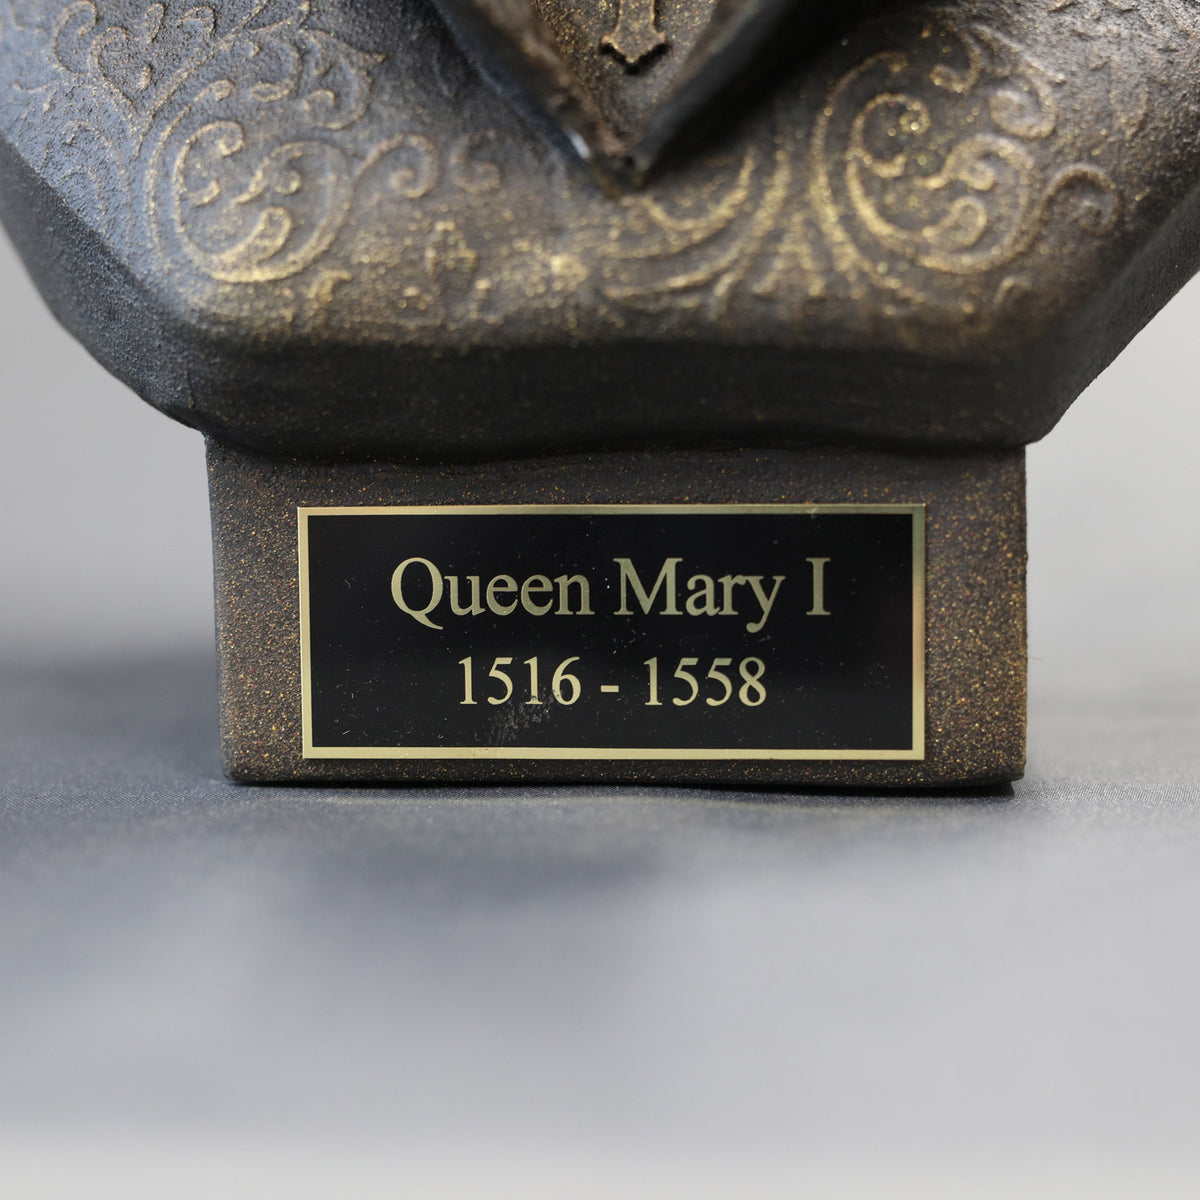 Queen Mary I - Sculpture